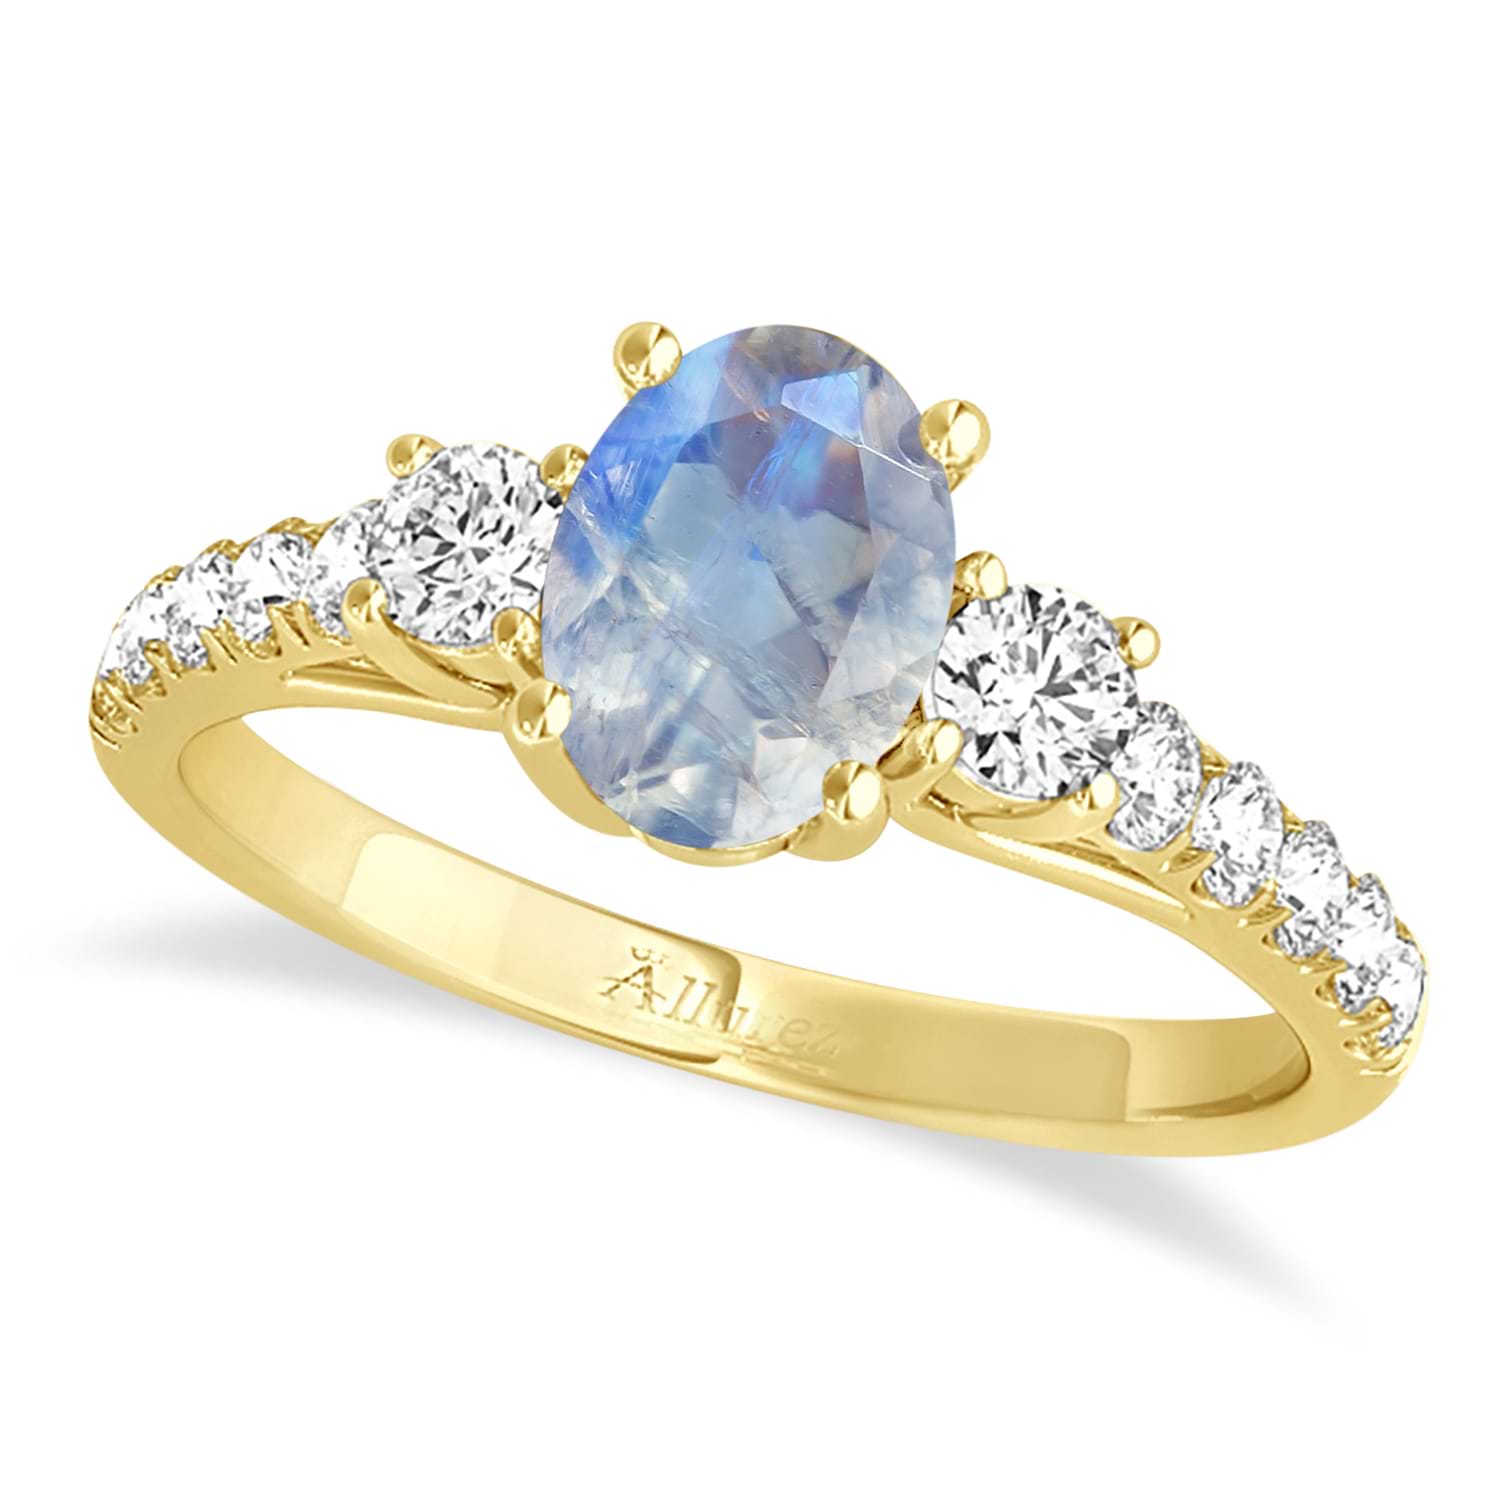 Oval Cut Moonstone & Diamond Engagement Ring 18k Yellow Gold (1.40ct)